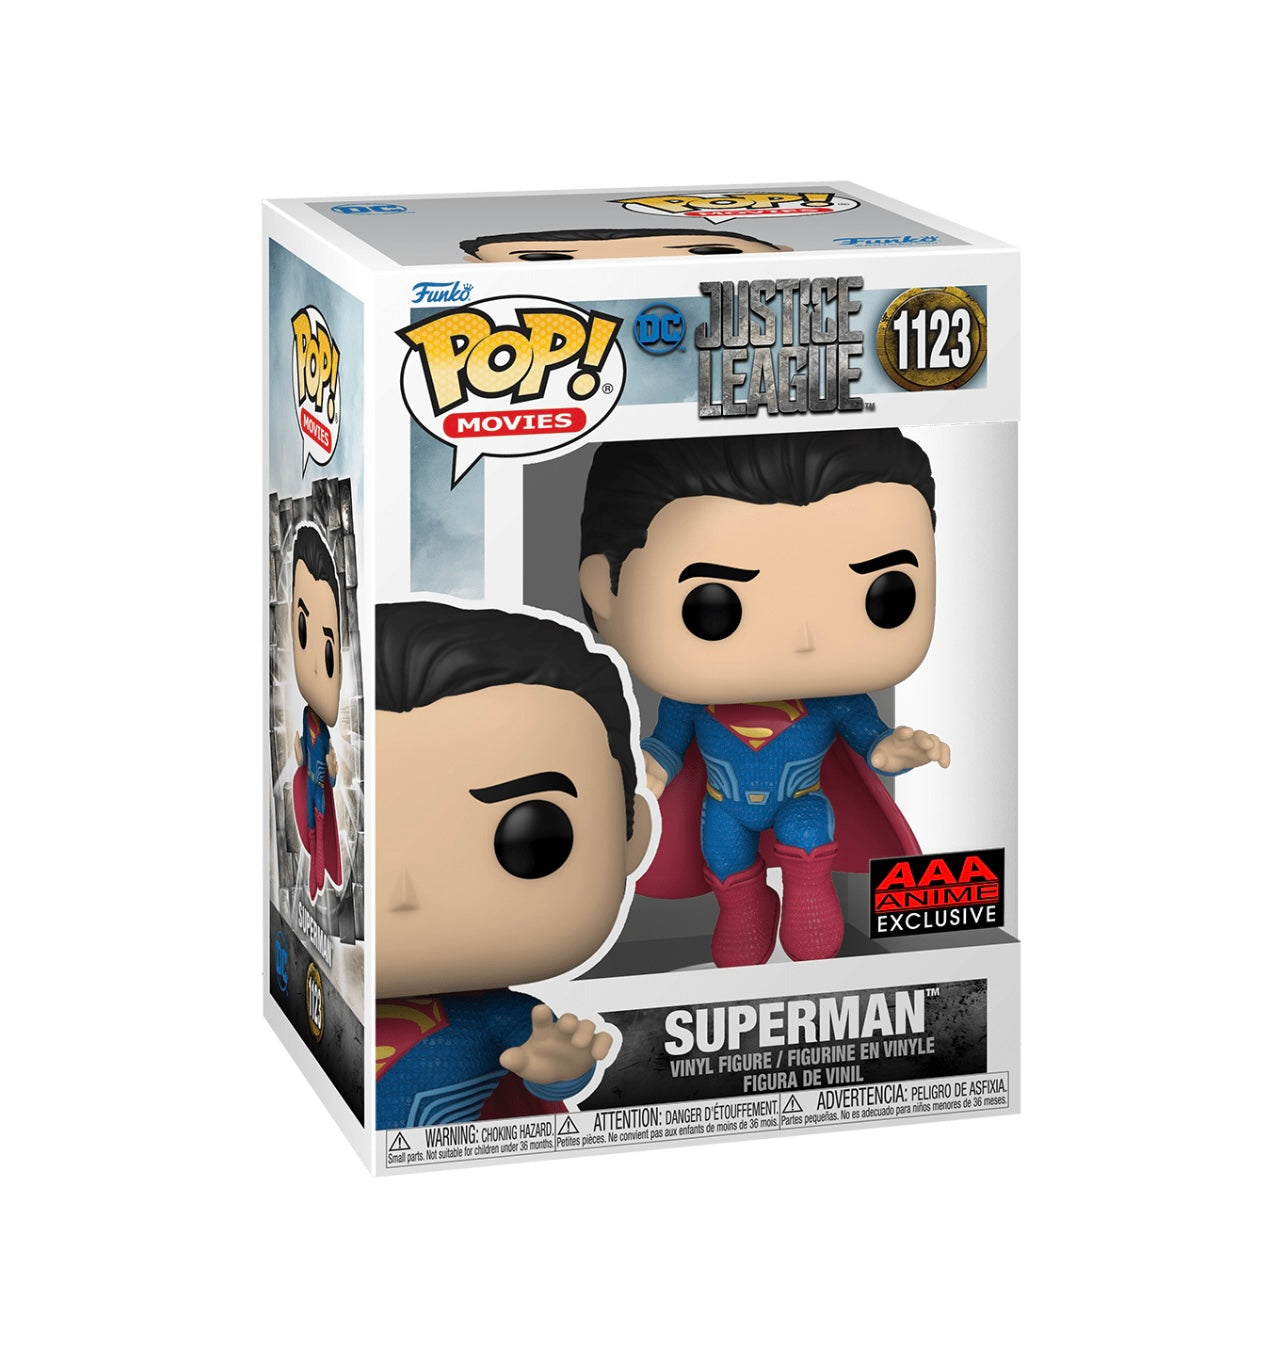 POP! Movies Justice League Superman #1123